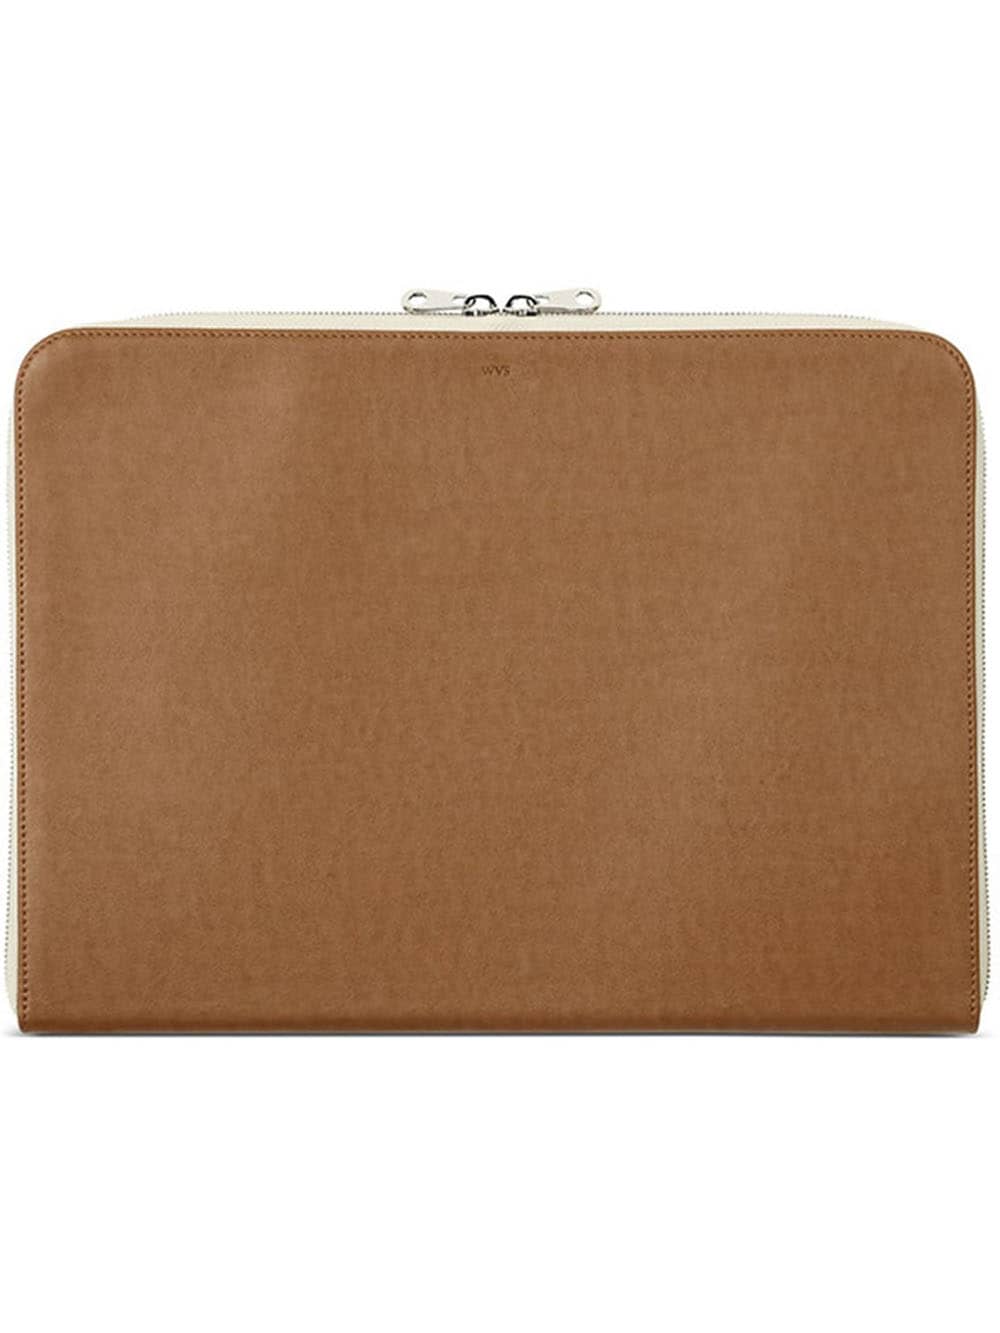 Tan vegan leather laptop case with zipper